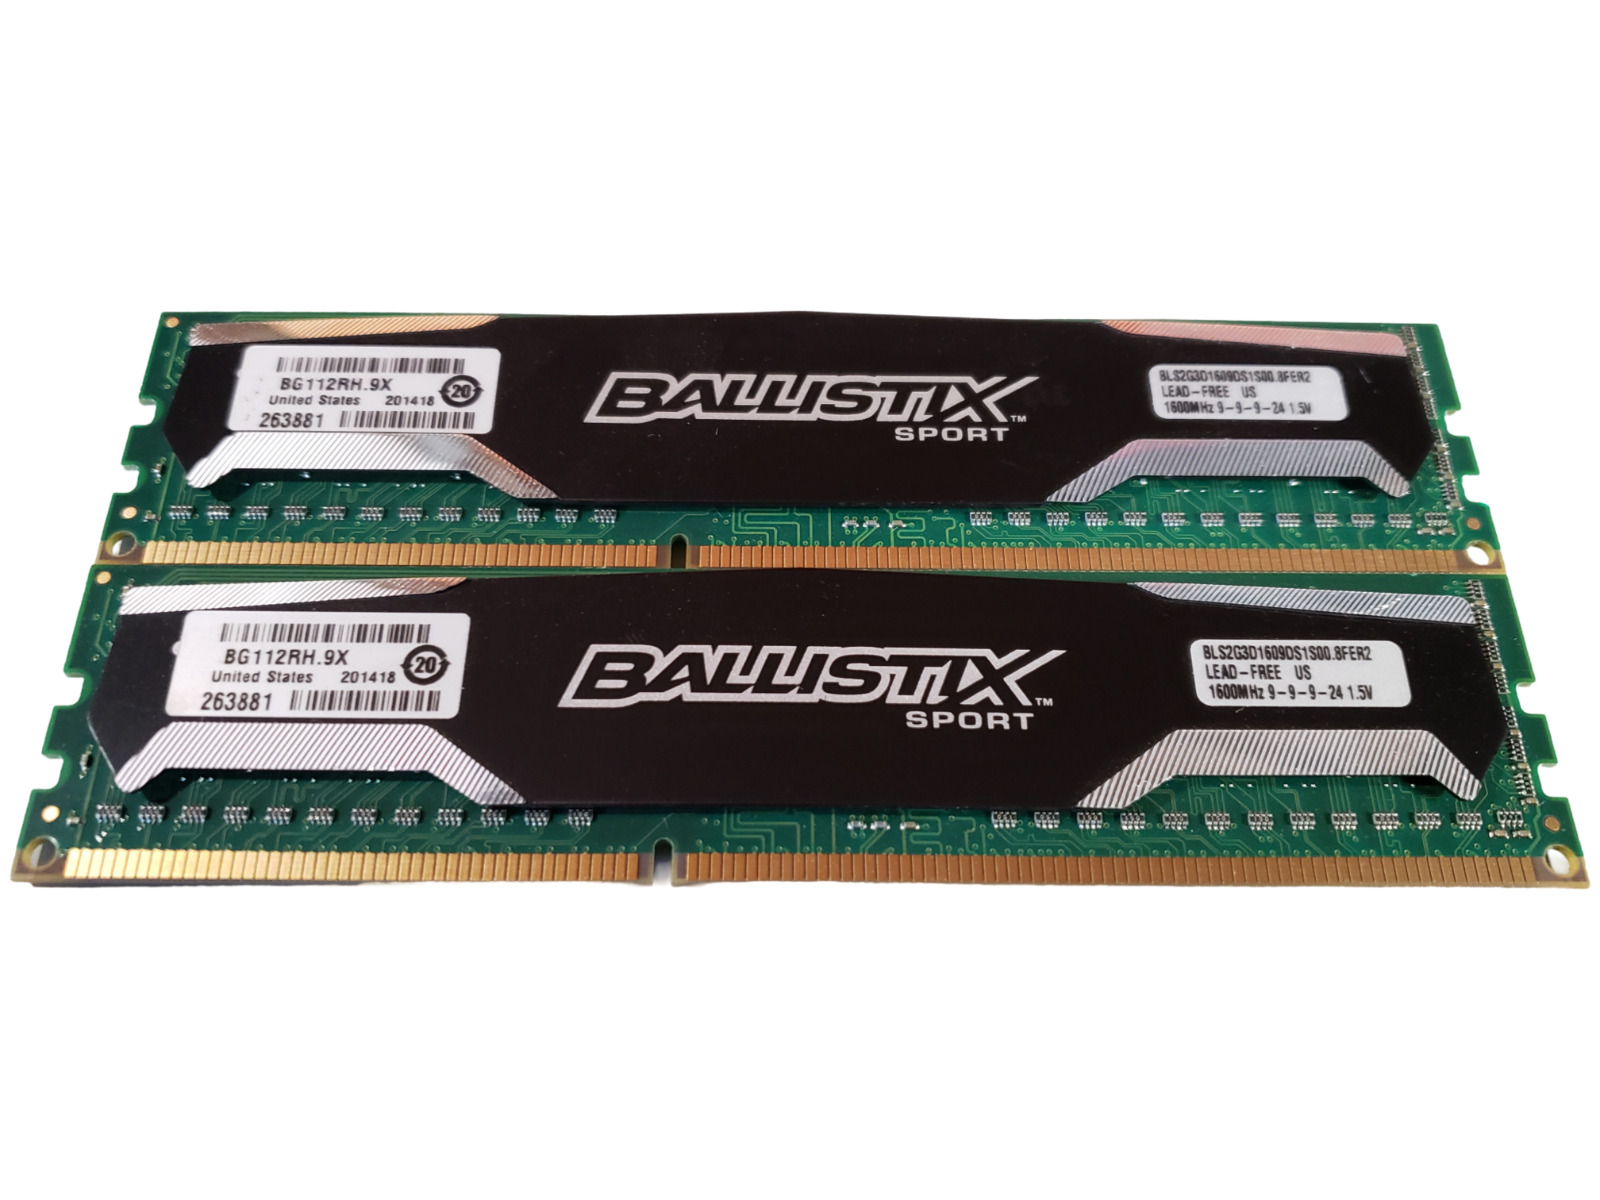 (2 Piece) Crucial Ballistix Sport BLS2G3D1609DS1S00 DDR3-1600 4GB (2x2GB) Memory